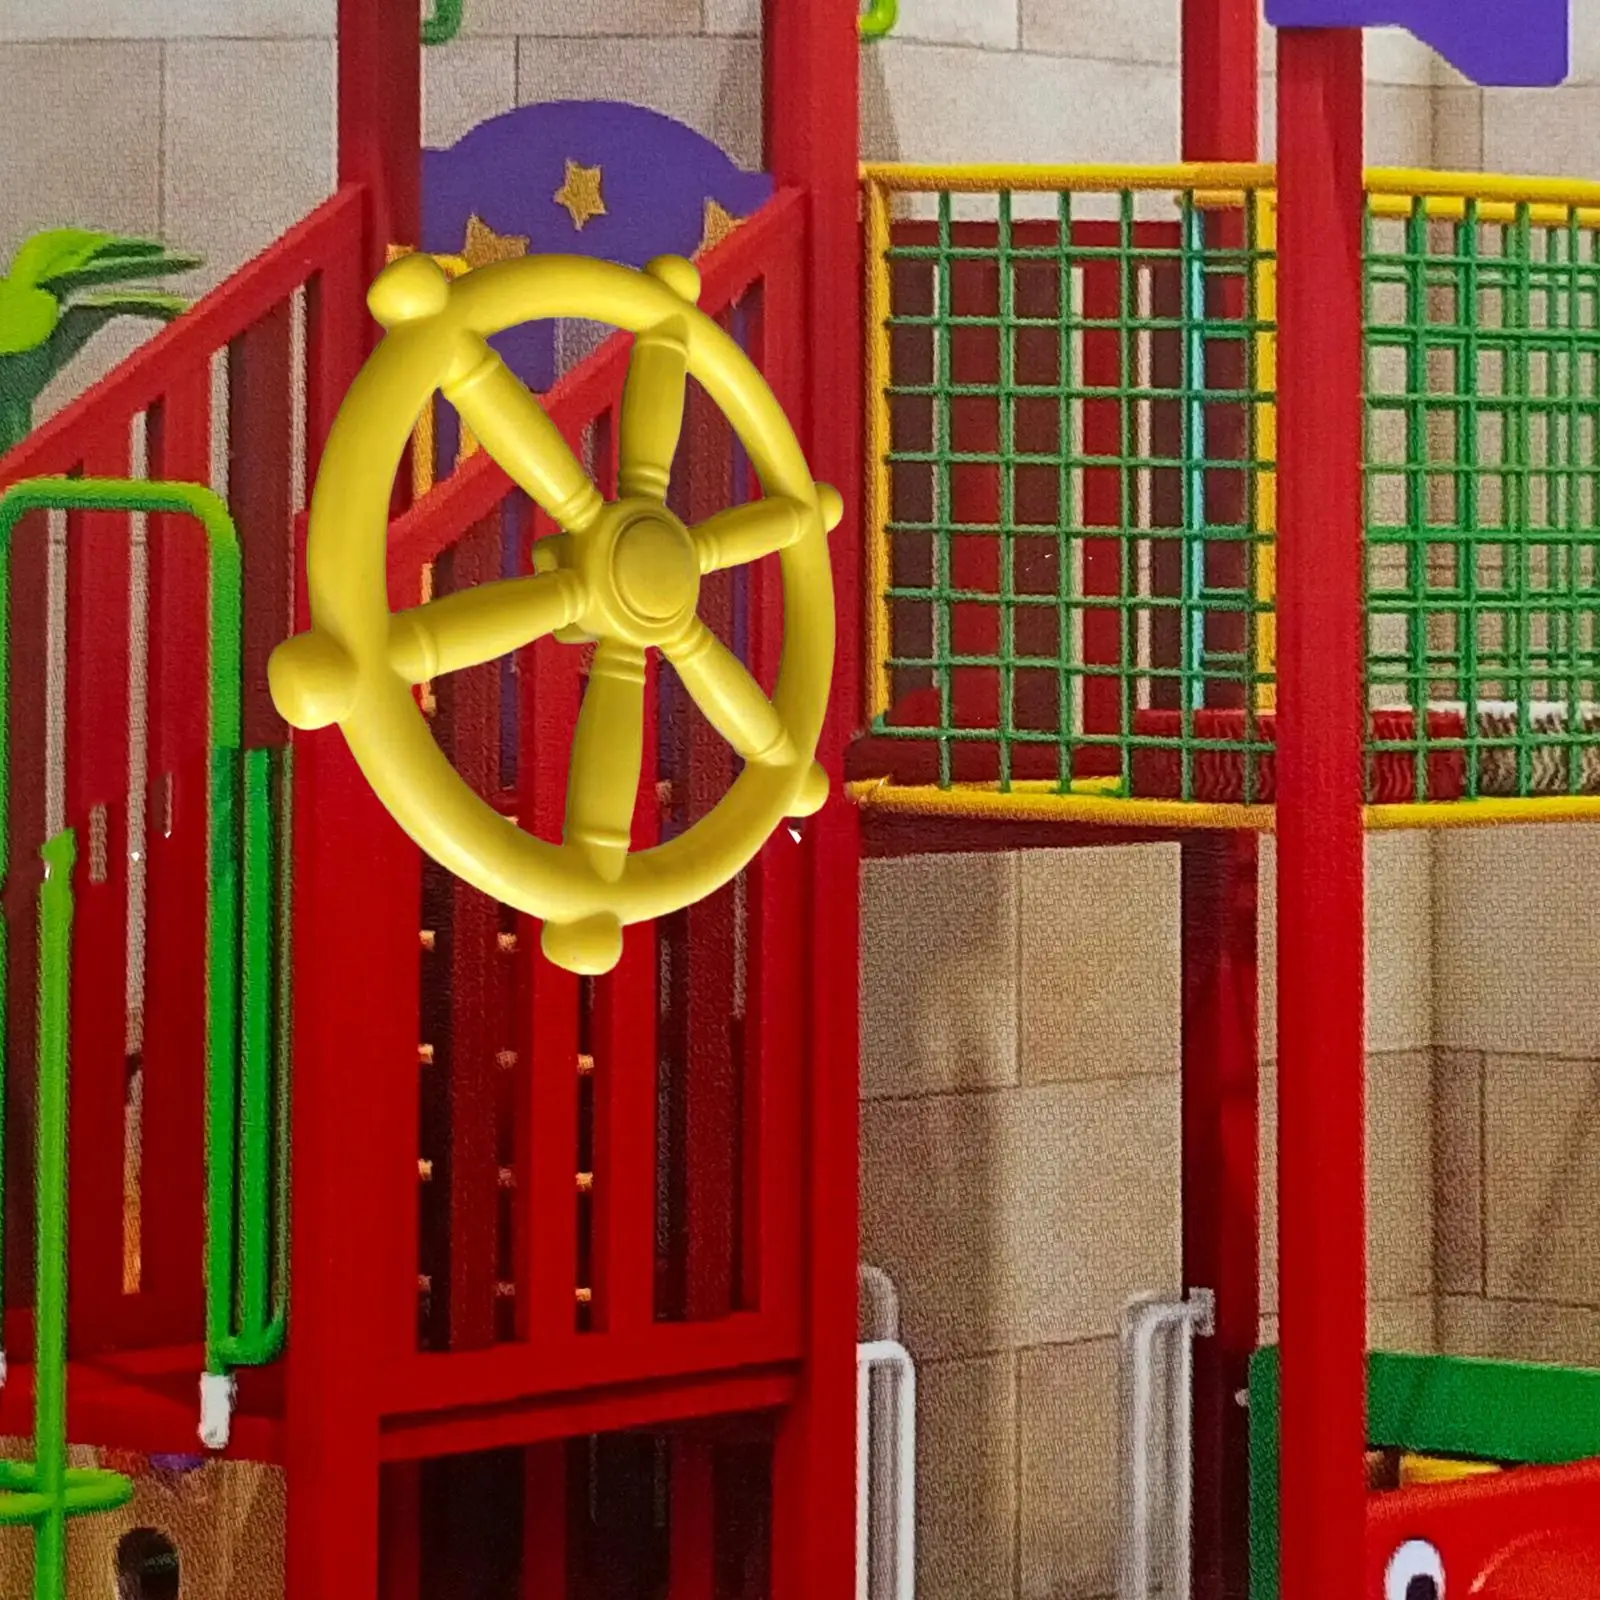 Pirate Ship Wheel Backyard Playset Equipment Kids Steering Wheel Toy Amusement Garden Playhouse Tree House Outdoor